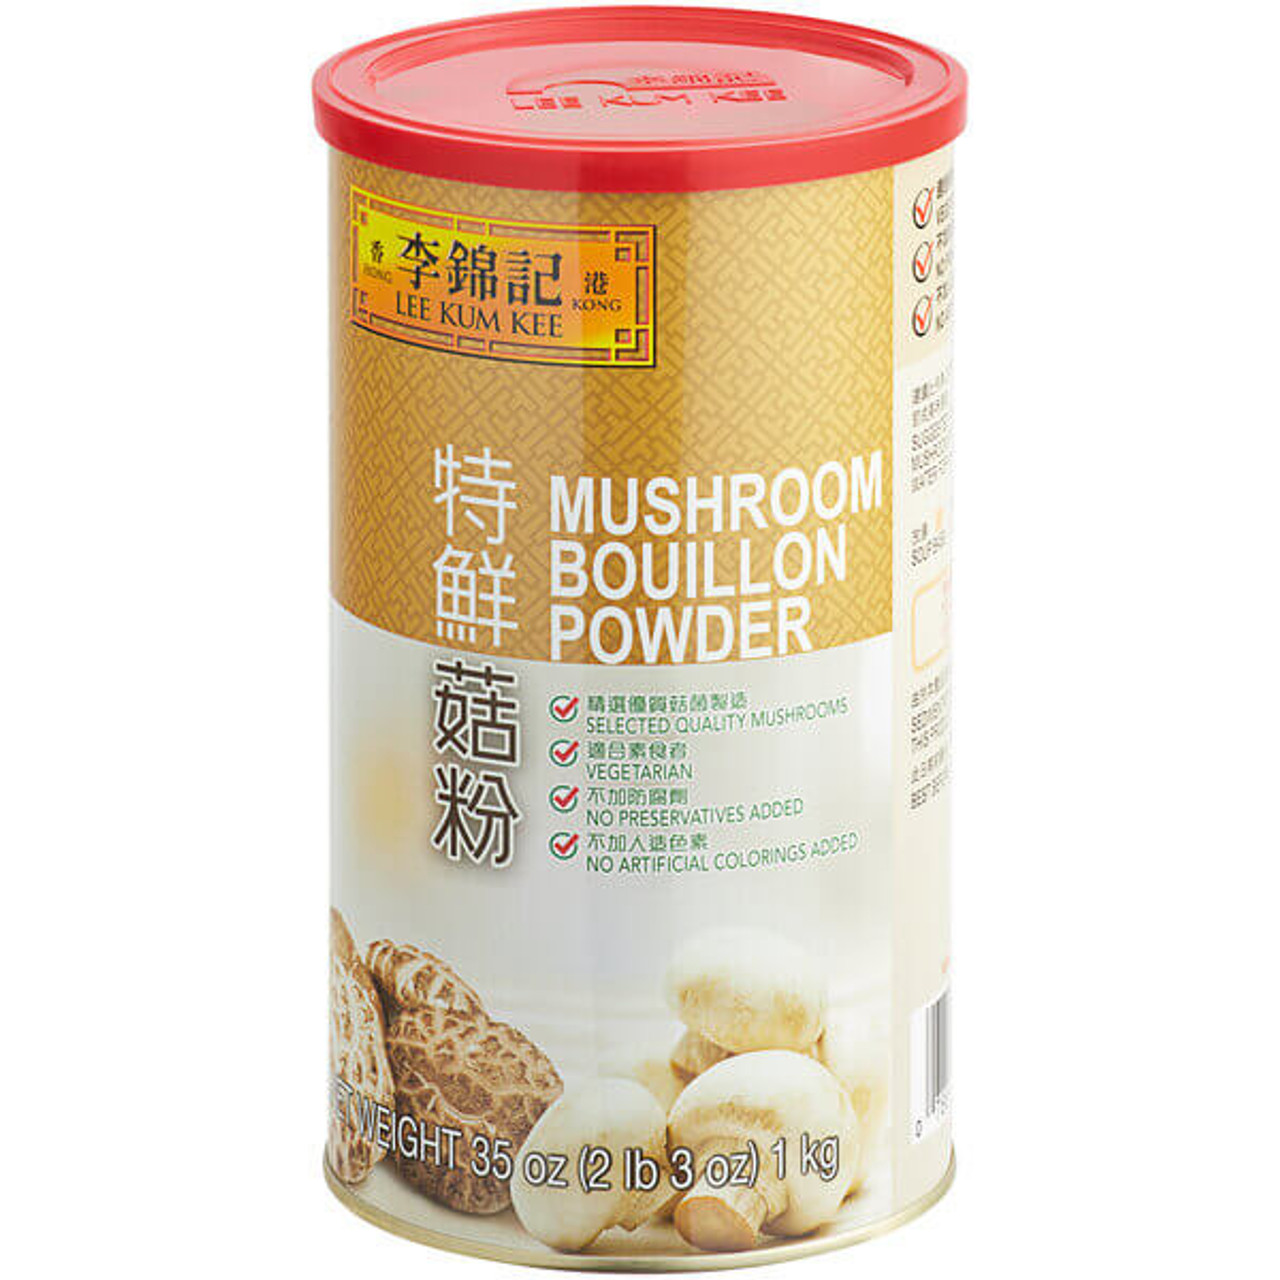 Lee Kum Kee Mushroom Bouillon Powder 2.2 lbs/1kg - 12/Case